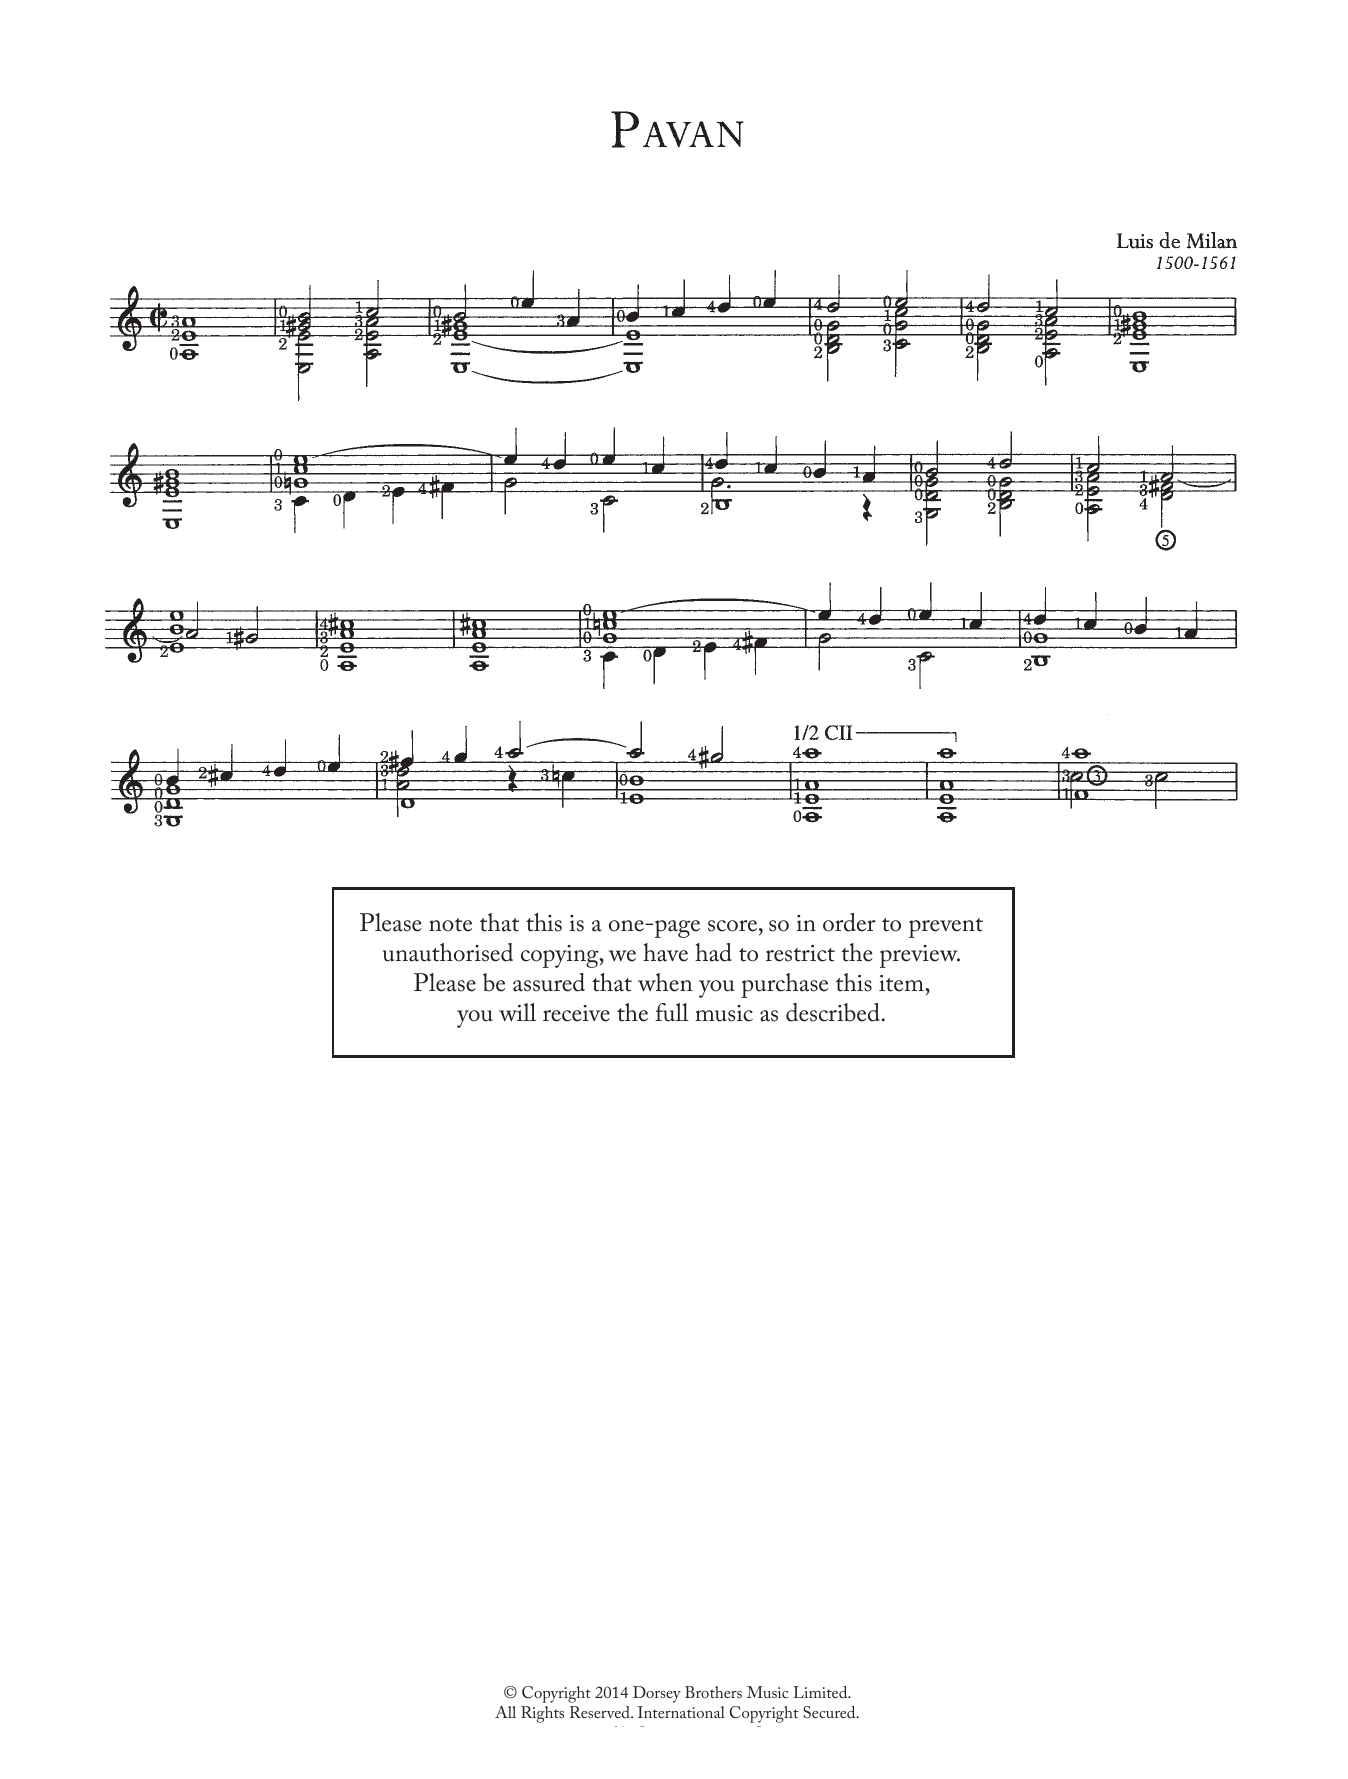 Luis de Milán Pavane No. 1 Sheet Music Notes & Chords for Guitar Tab - Download or Print PDF